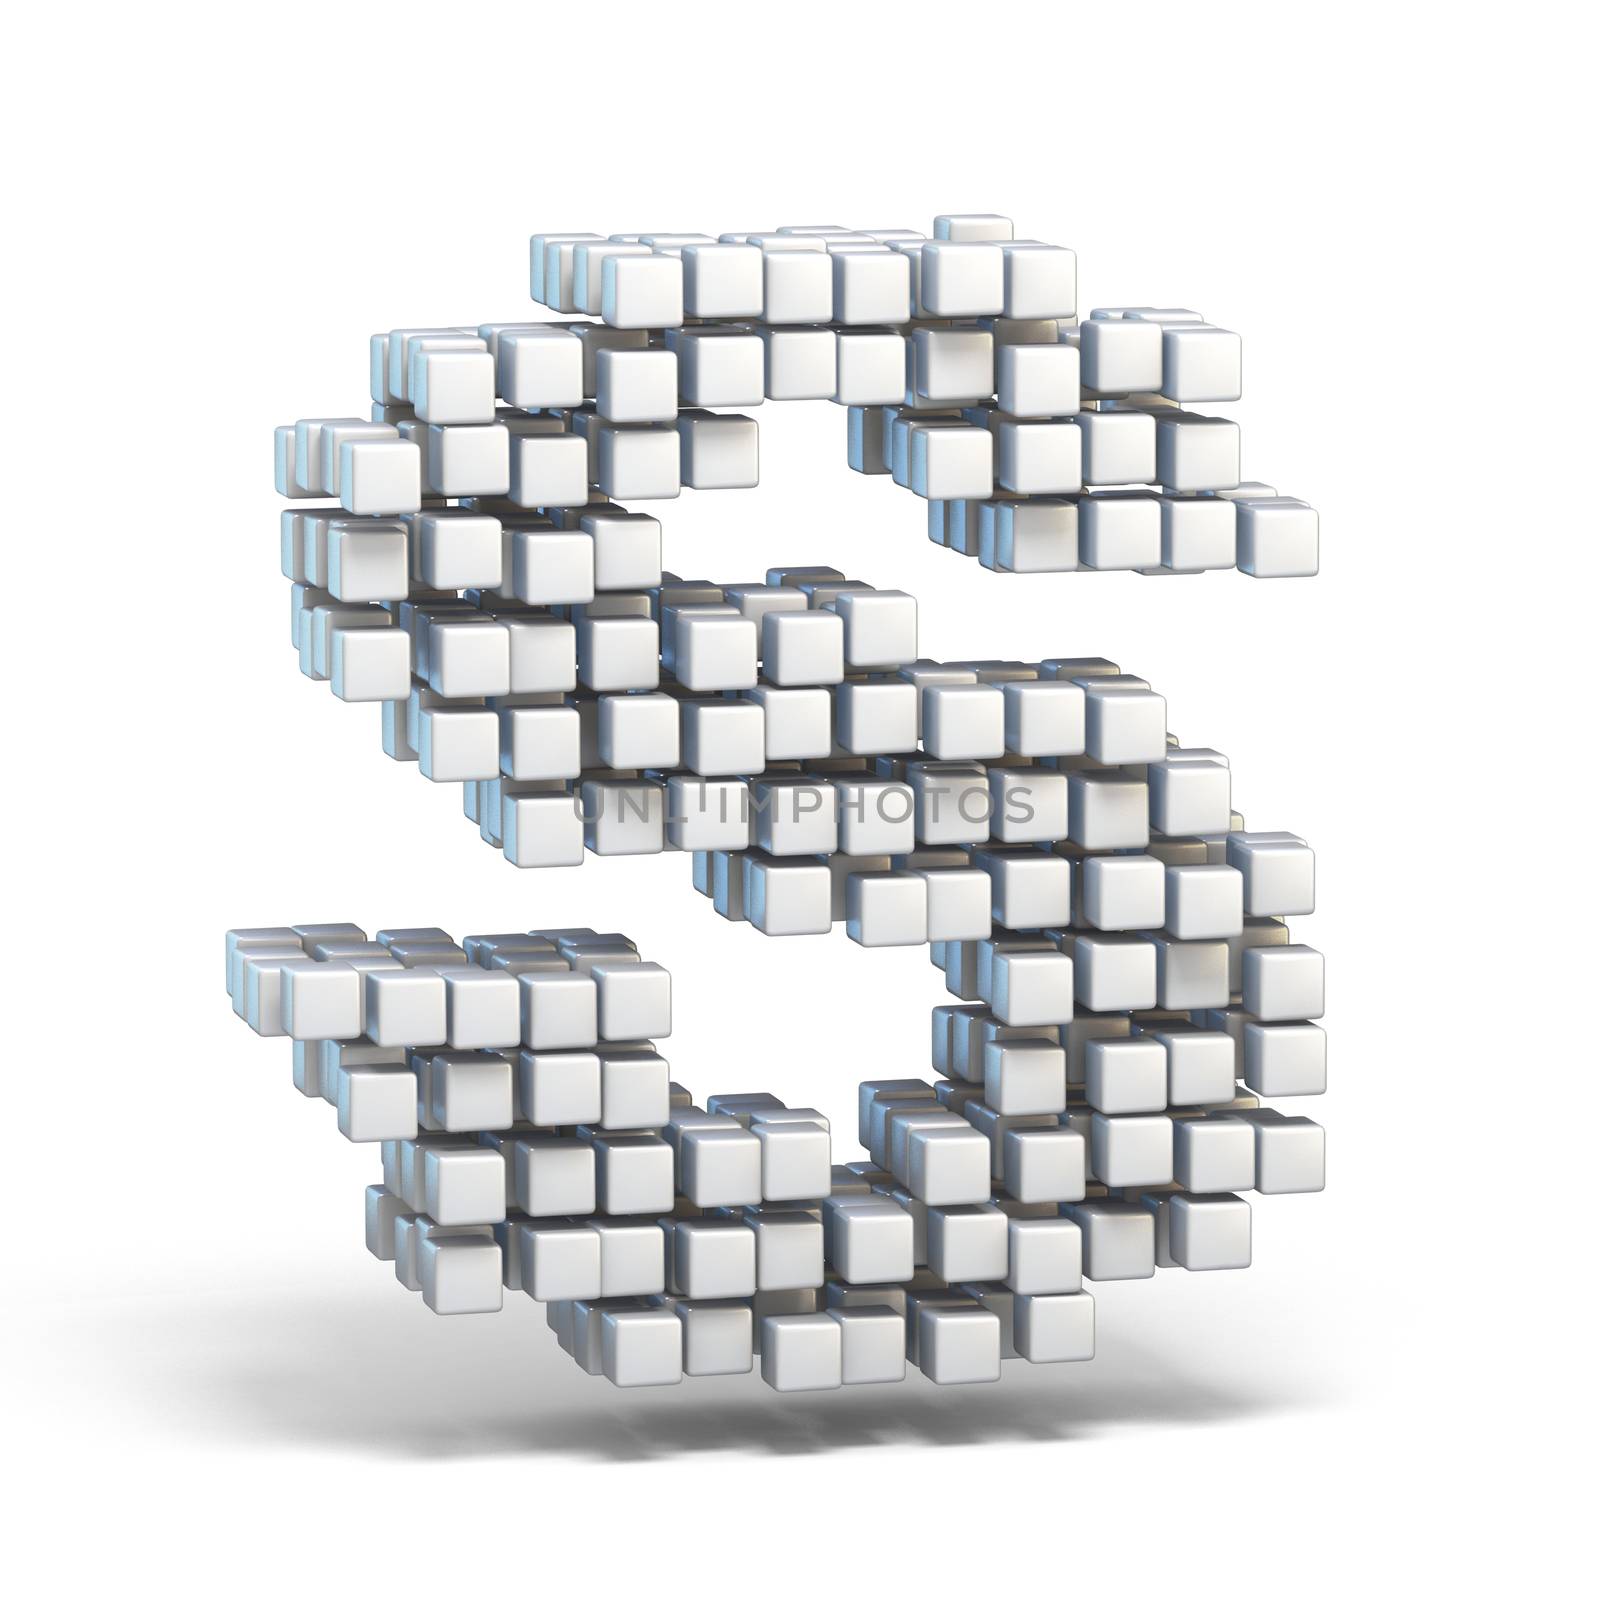 White voxel cubes font Letter S 3D render illustration isolated on white background